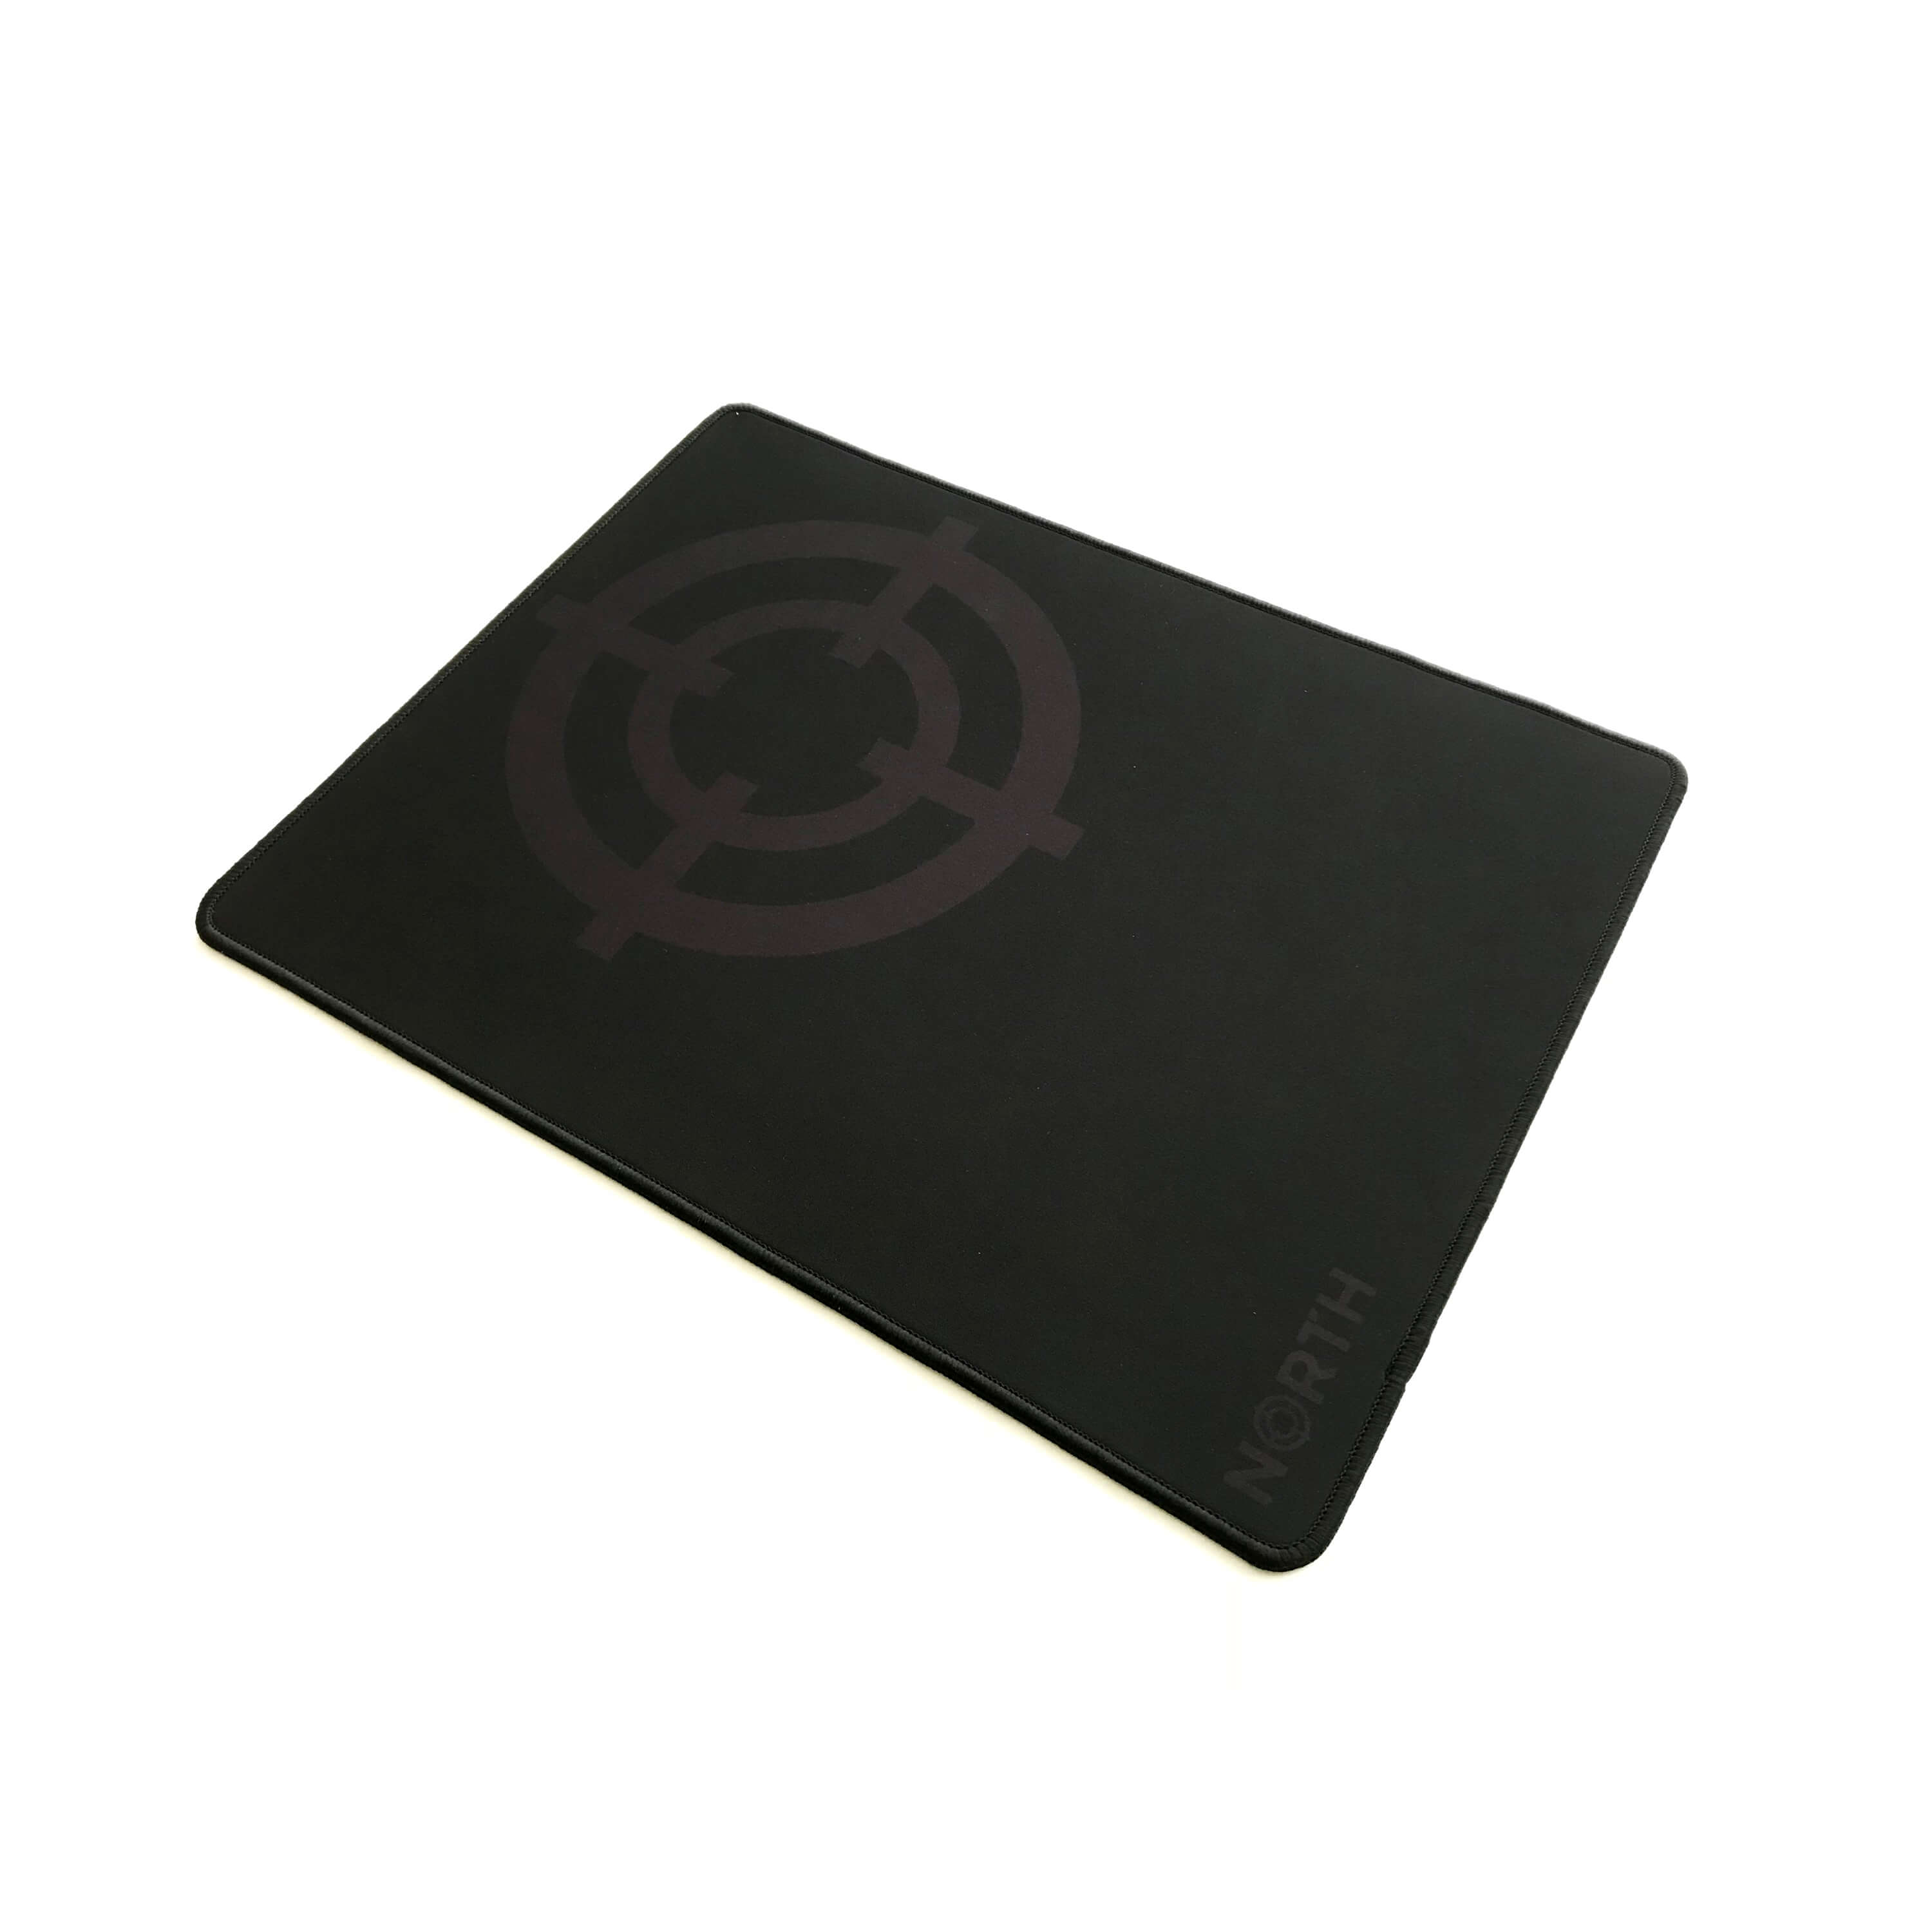 Mousepad Pro Gaming Black 400x300mm